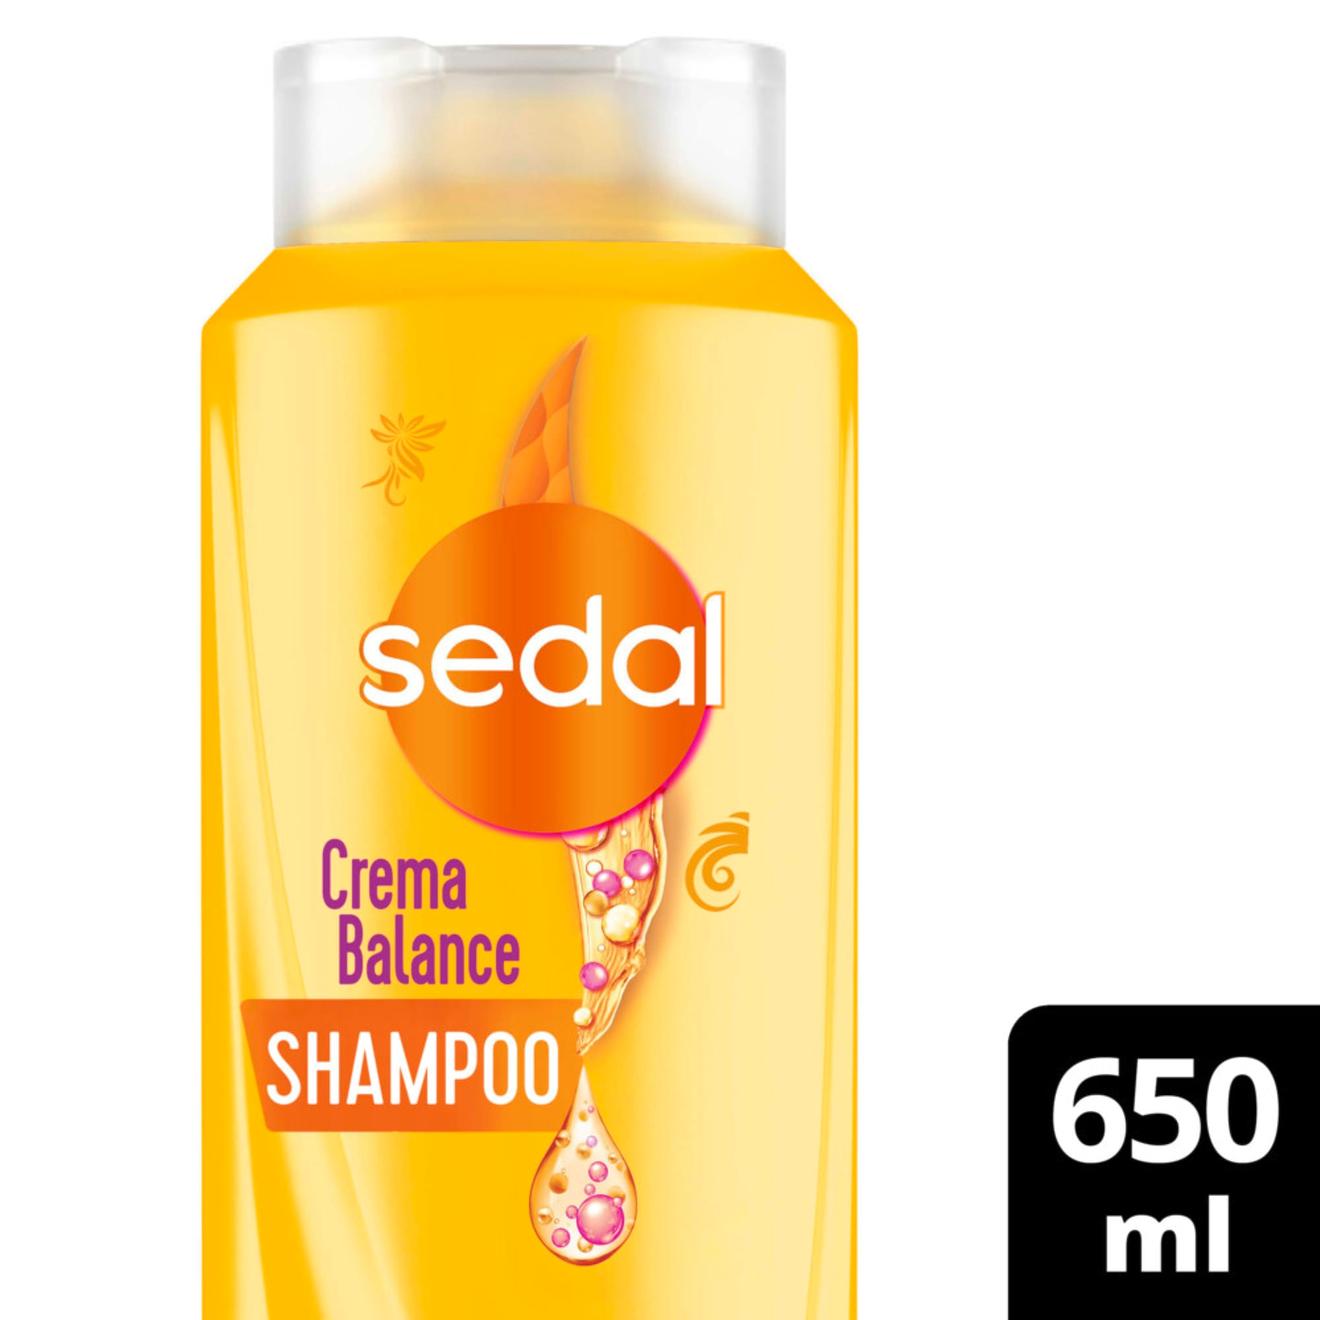 Oferta de Shampoo Seda crema balance 650 cc. por $3315 en Carrefour